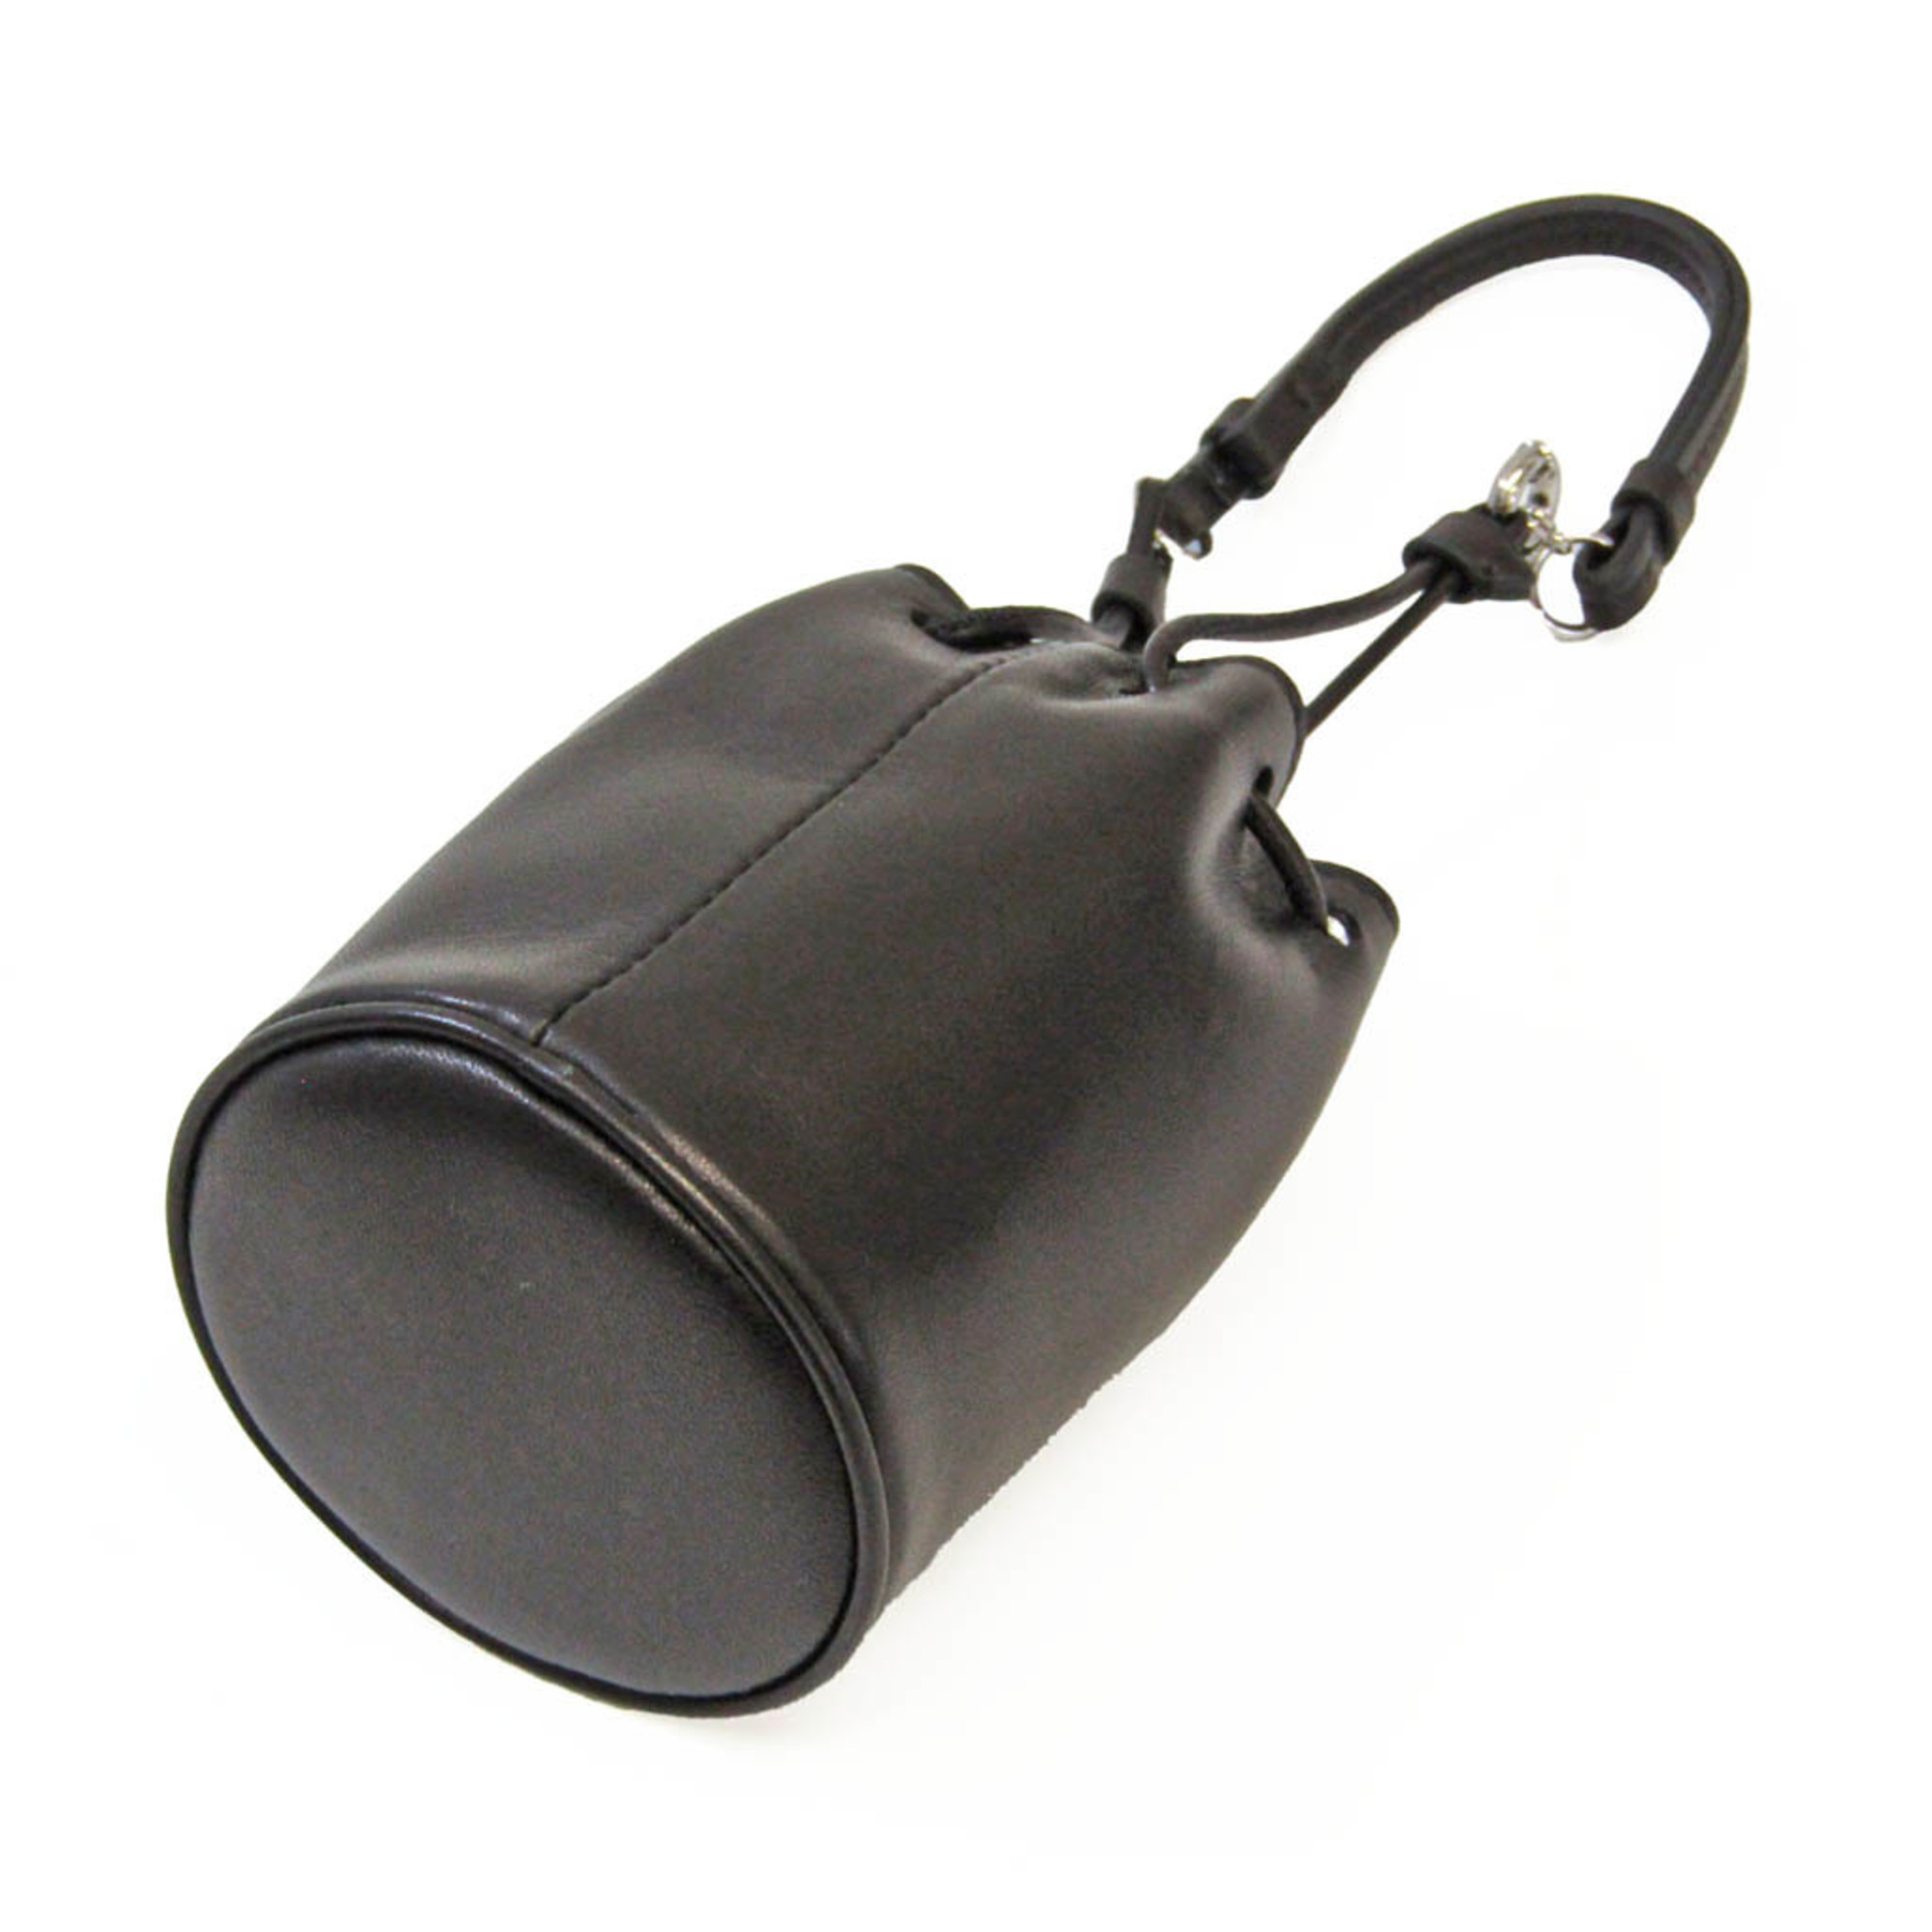 Maison Margiela Mini Bag Bag Charm SA1VL0005 Women's Leather Pouch Black